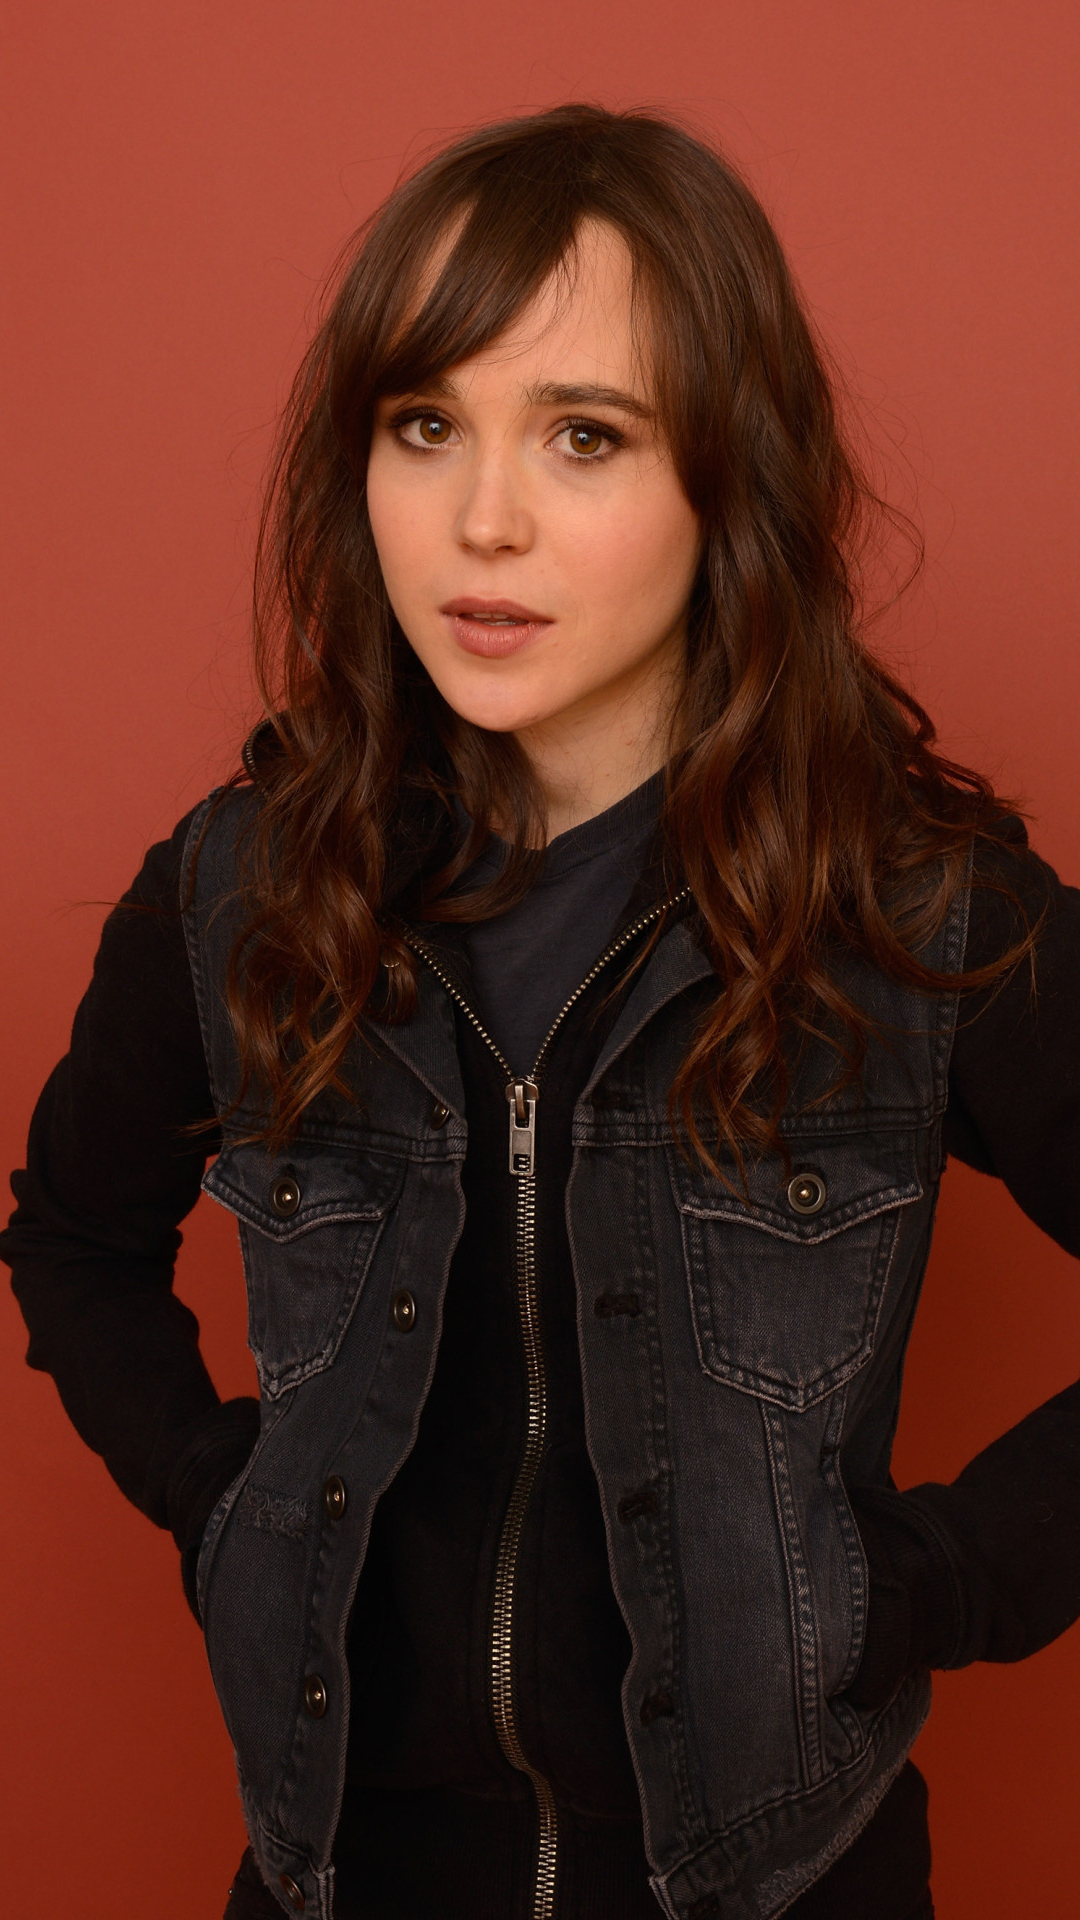 Baixar papel de parede para celular de Celebridade, Ellen Page gratuito.